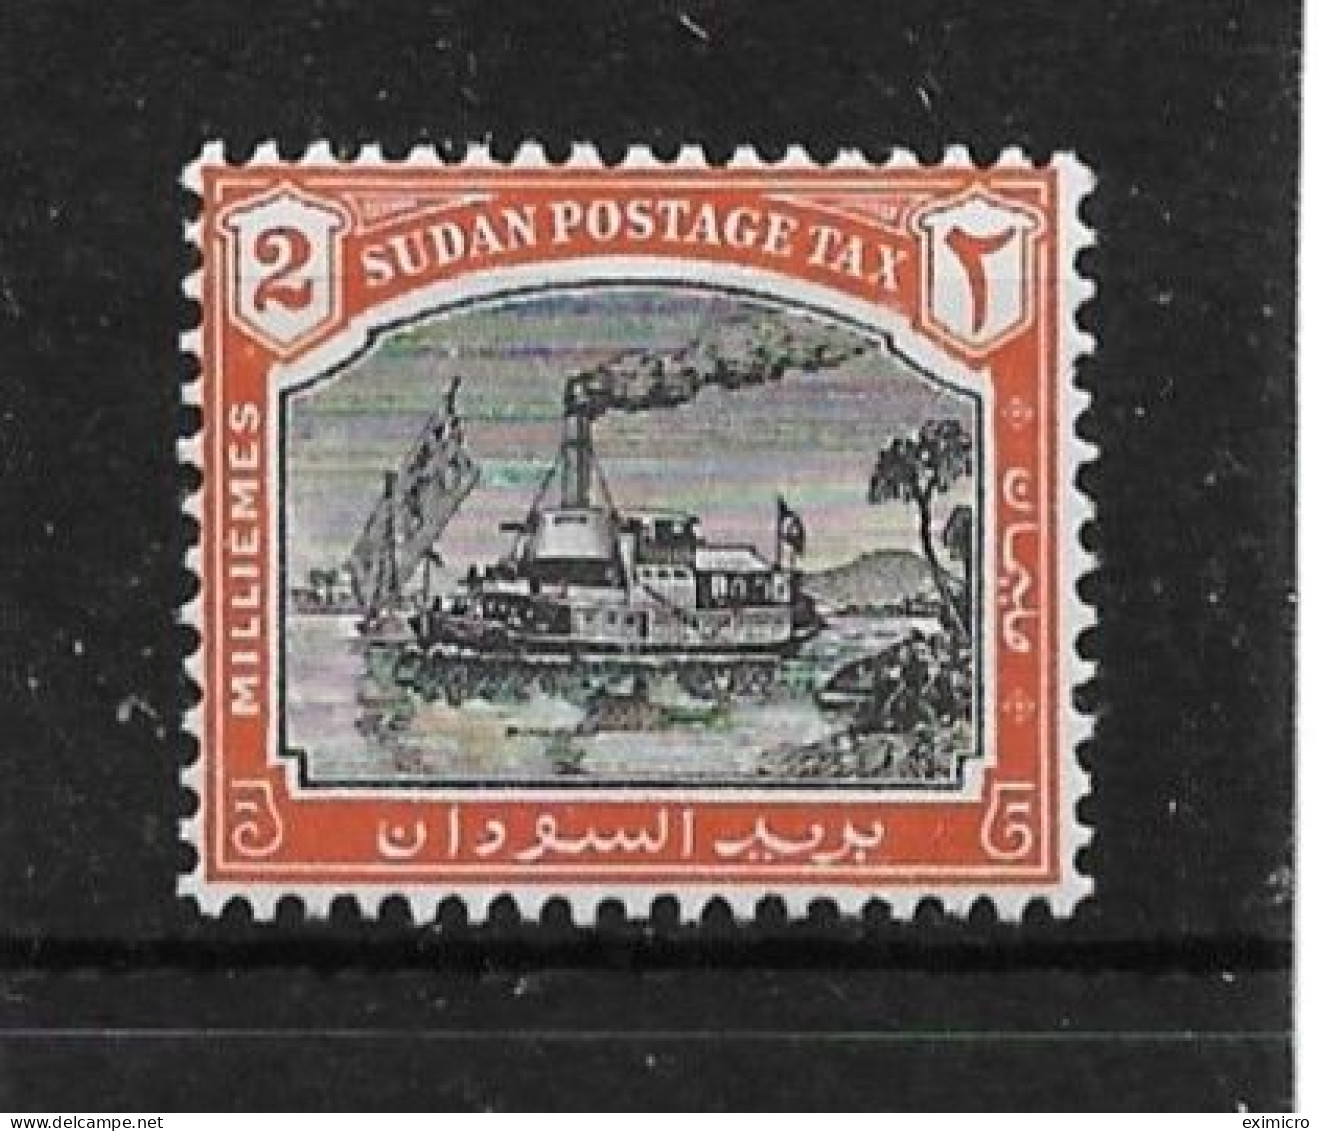 SUDAN 1948 2m POSTAGE DUE  SG D12 UNMOUNTED MINT Cat £5.50 - Soedan (...-1951)